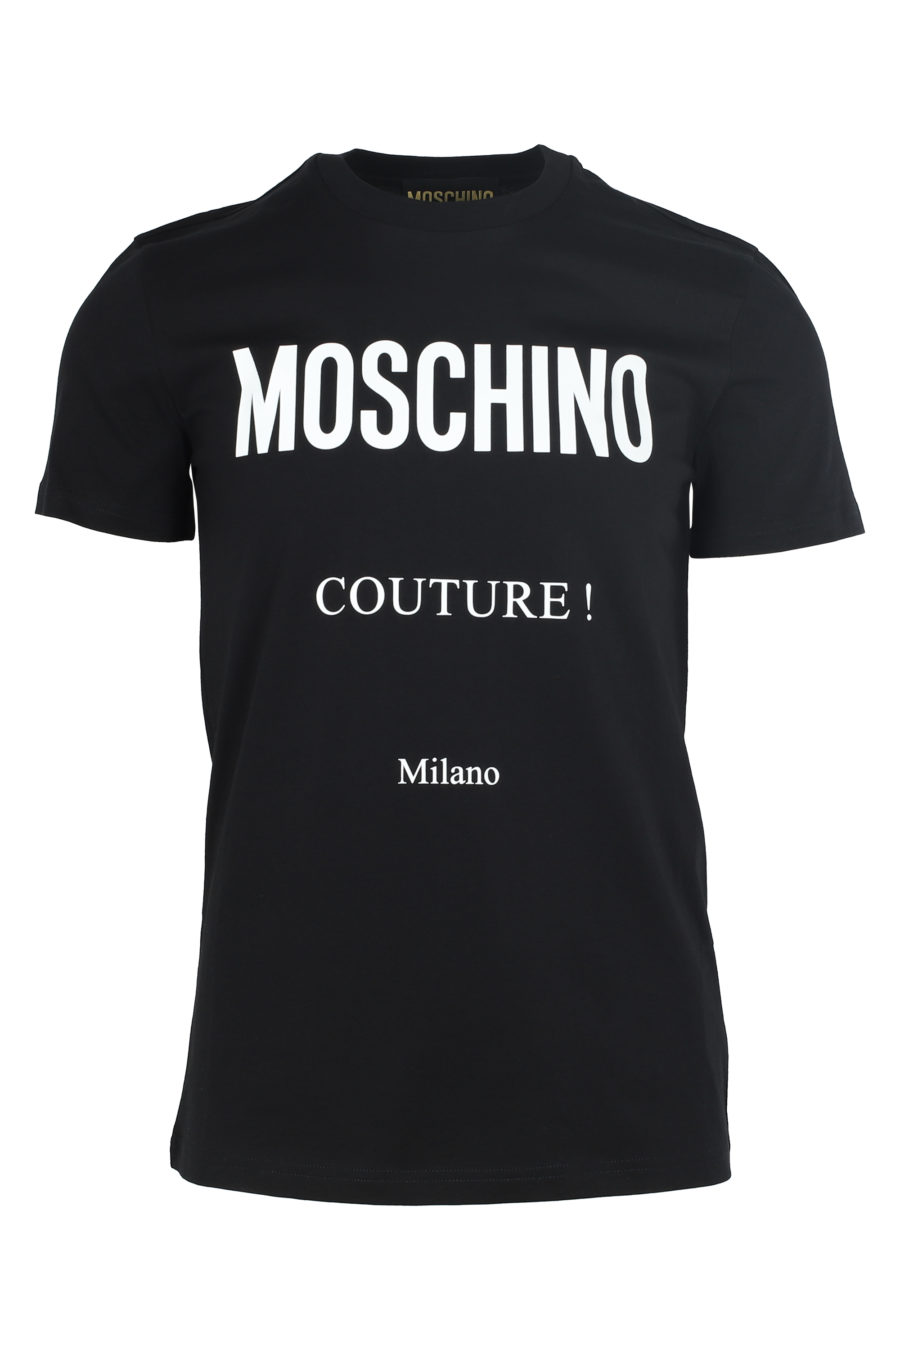 Camiseta negra con logo "Couture" - IMG 5996